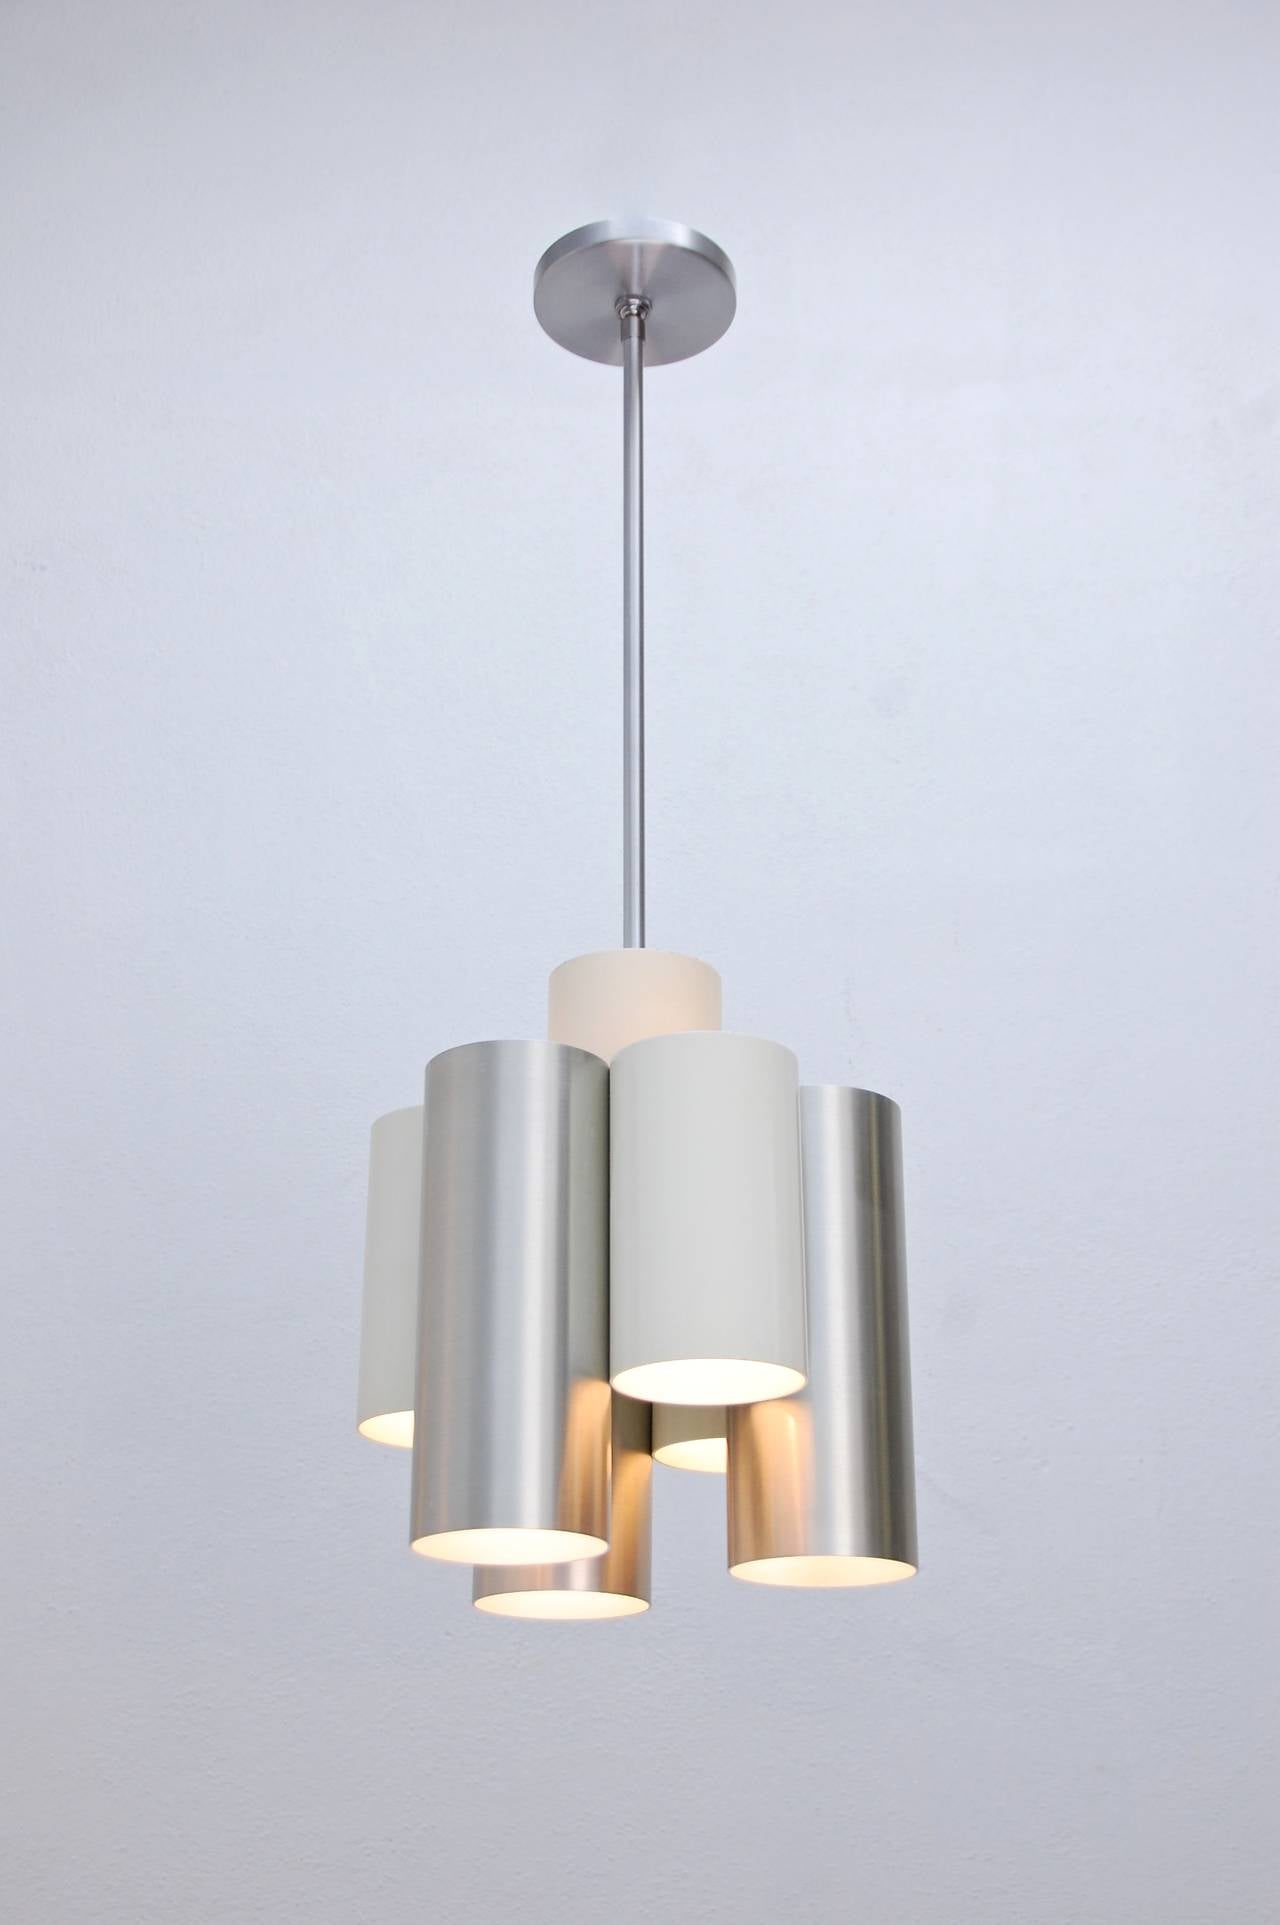 Modern cylinder motif pendant with (6) candelabra based lights from Italy. Soft light casts downward.

OAD: 33